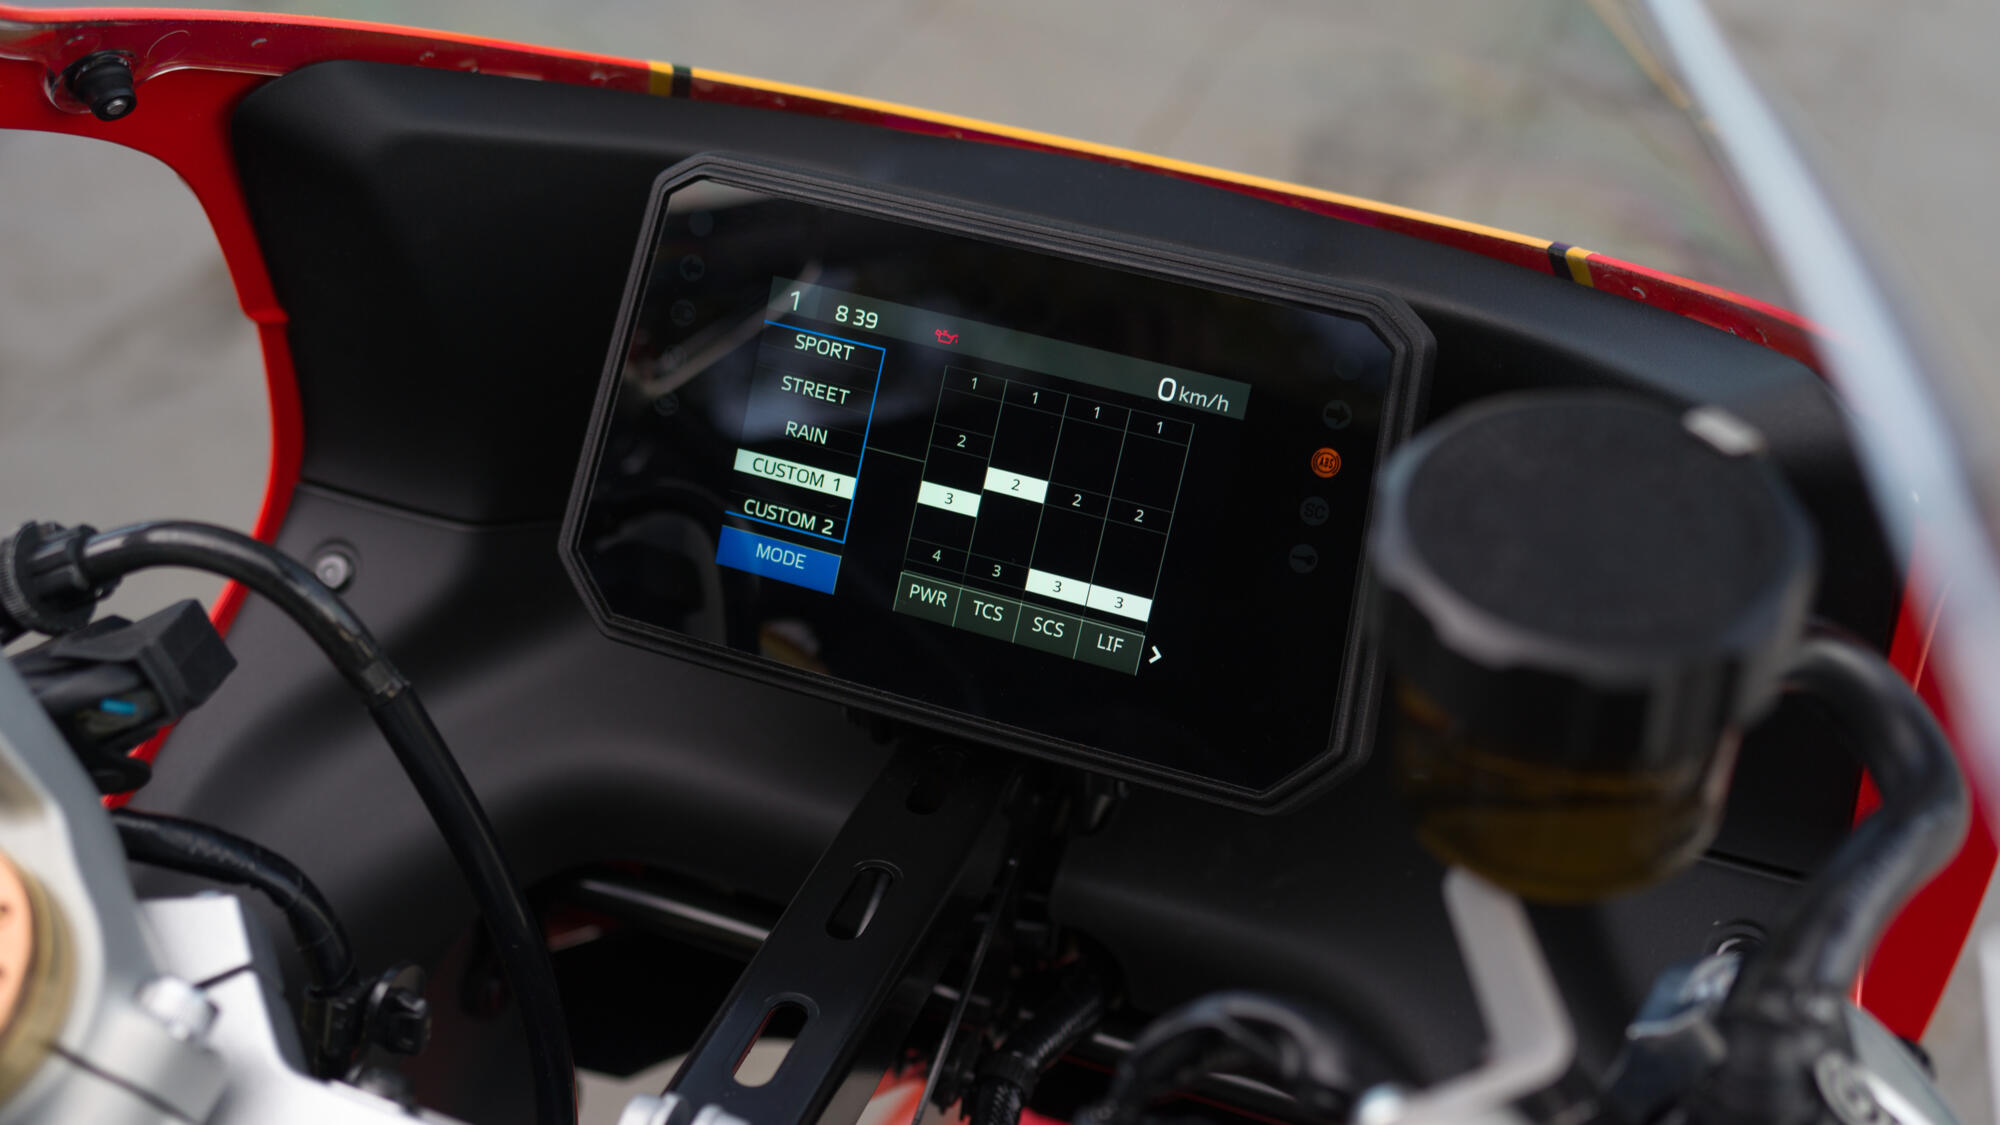 Yamaha Ride Control YRC and 6-axis IMU